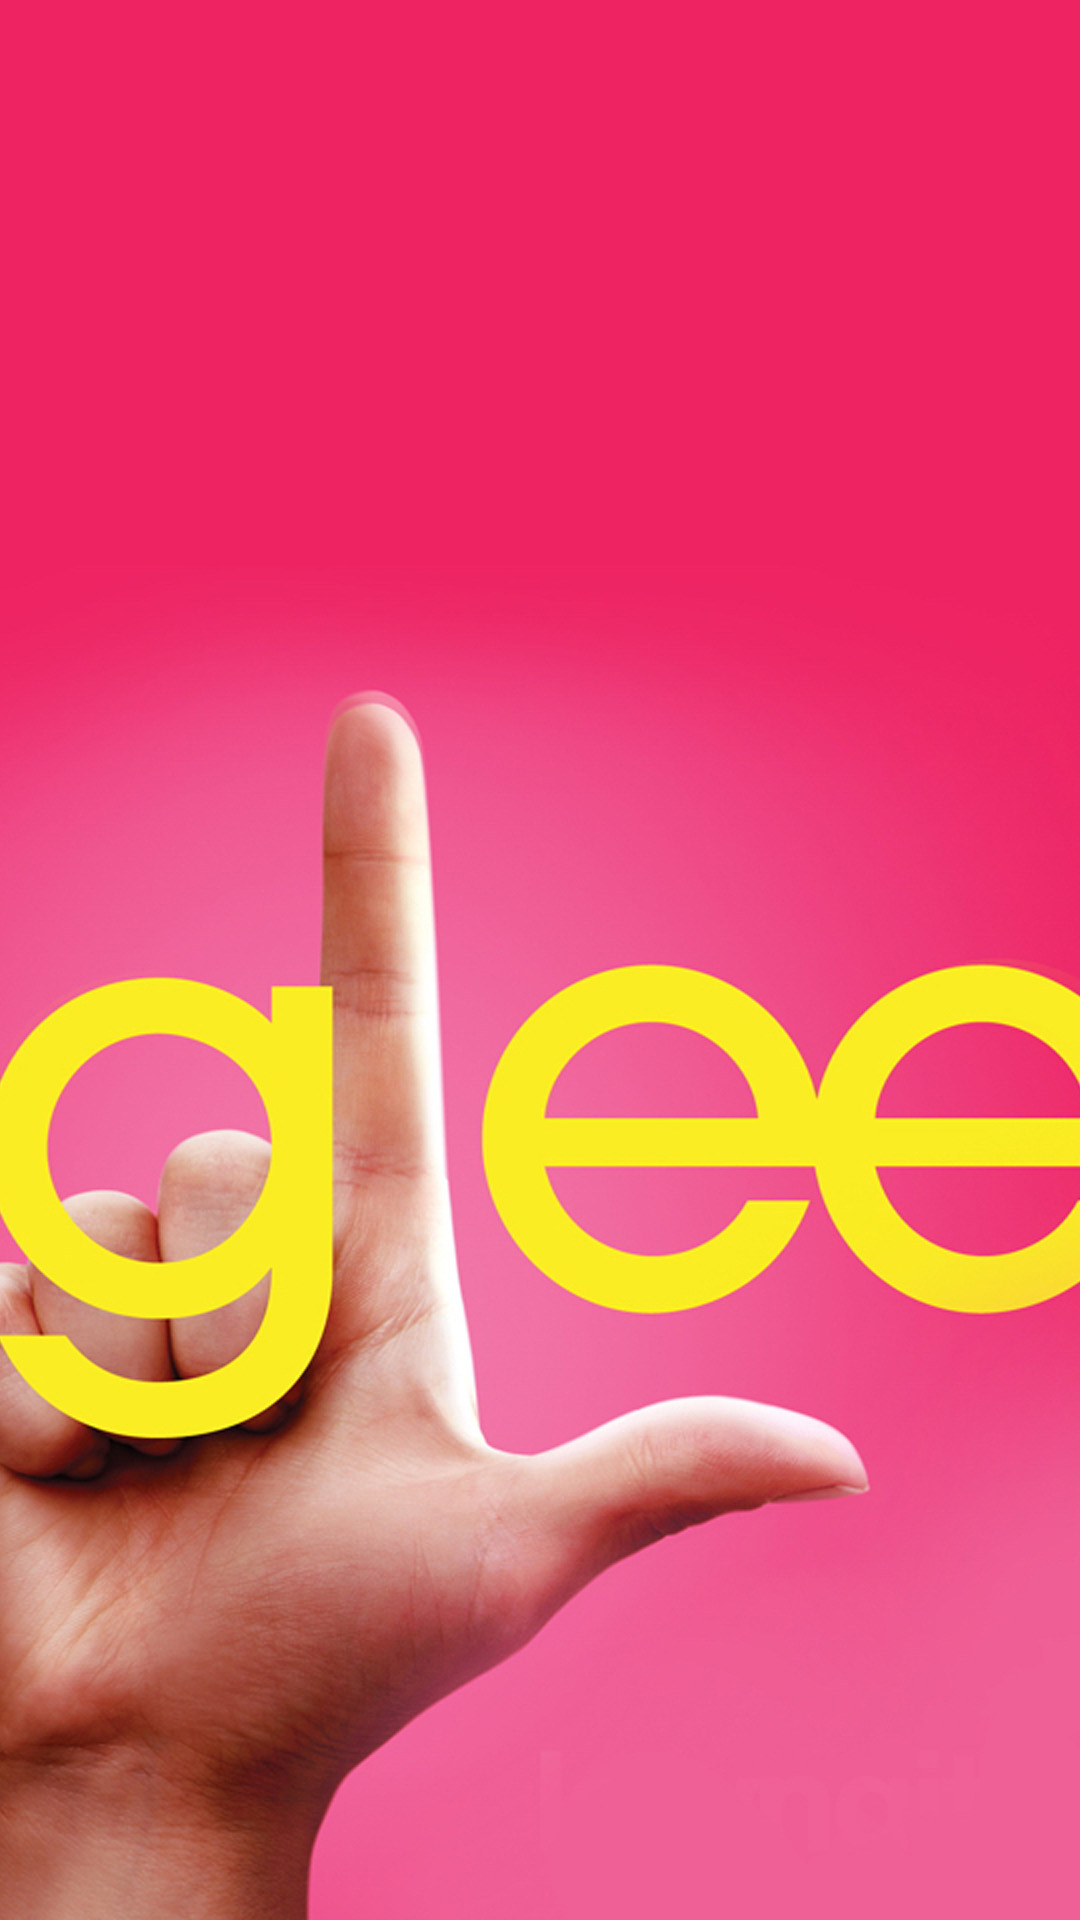 Glee Pink Galaxy S4 Wallpaper